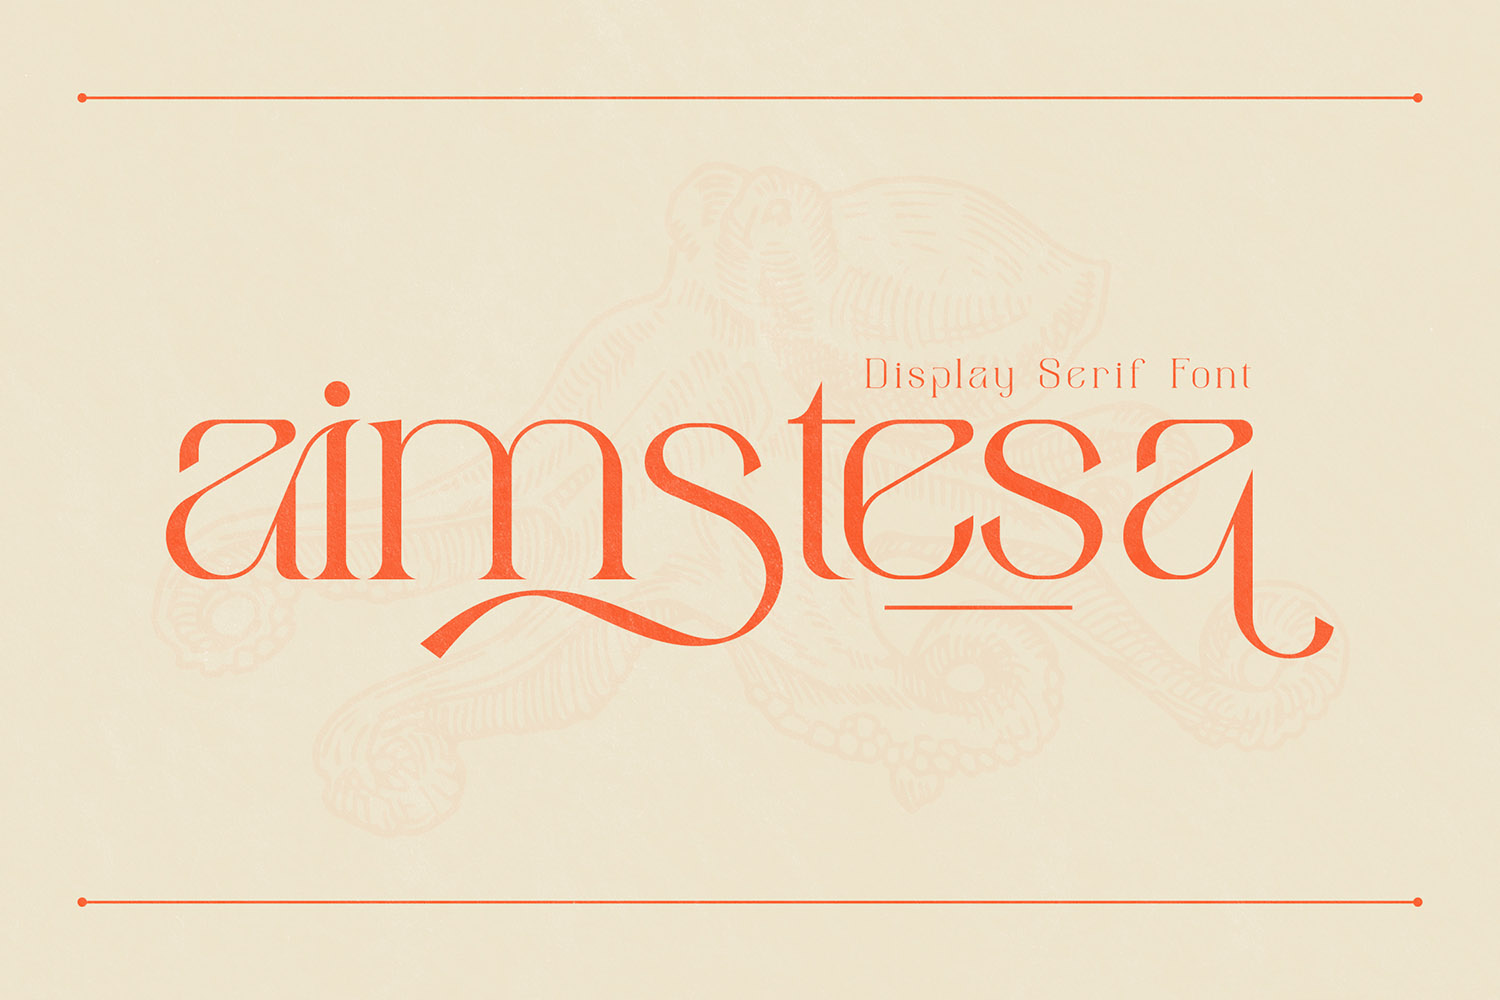 Aimstesa Free Font